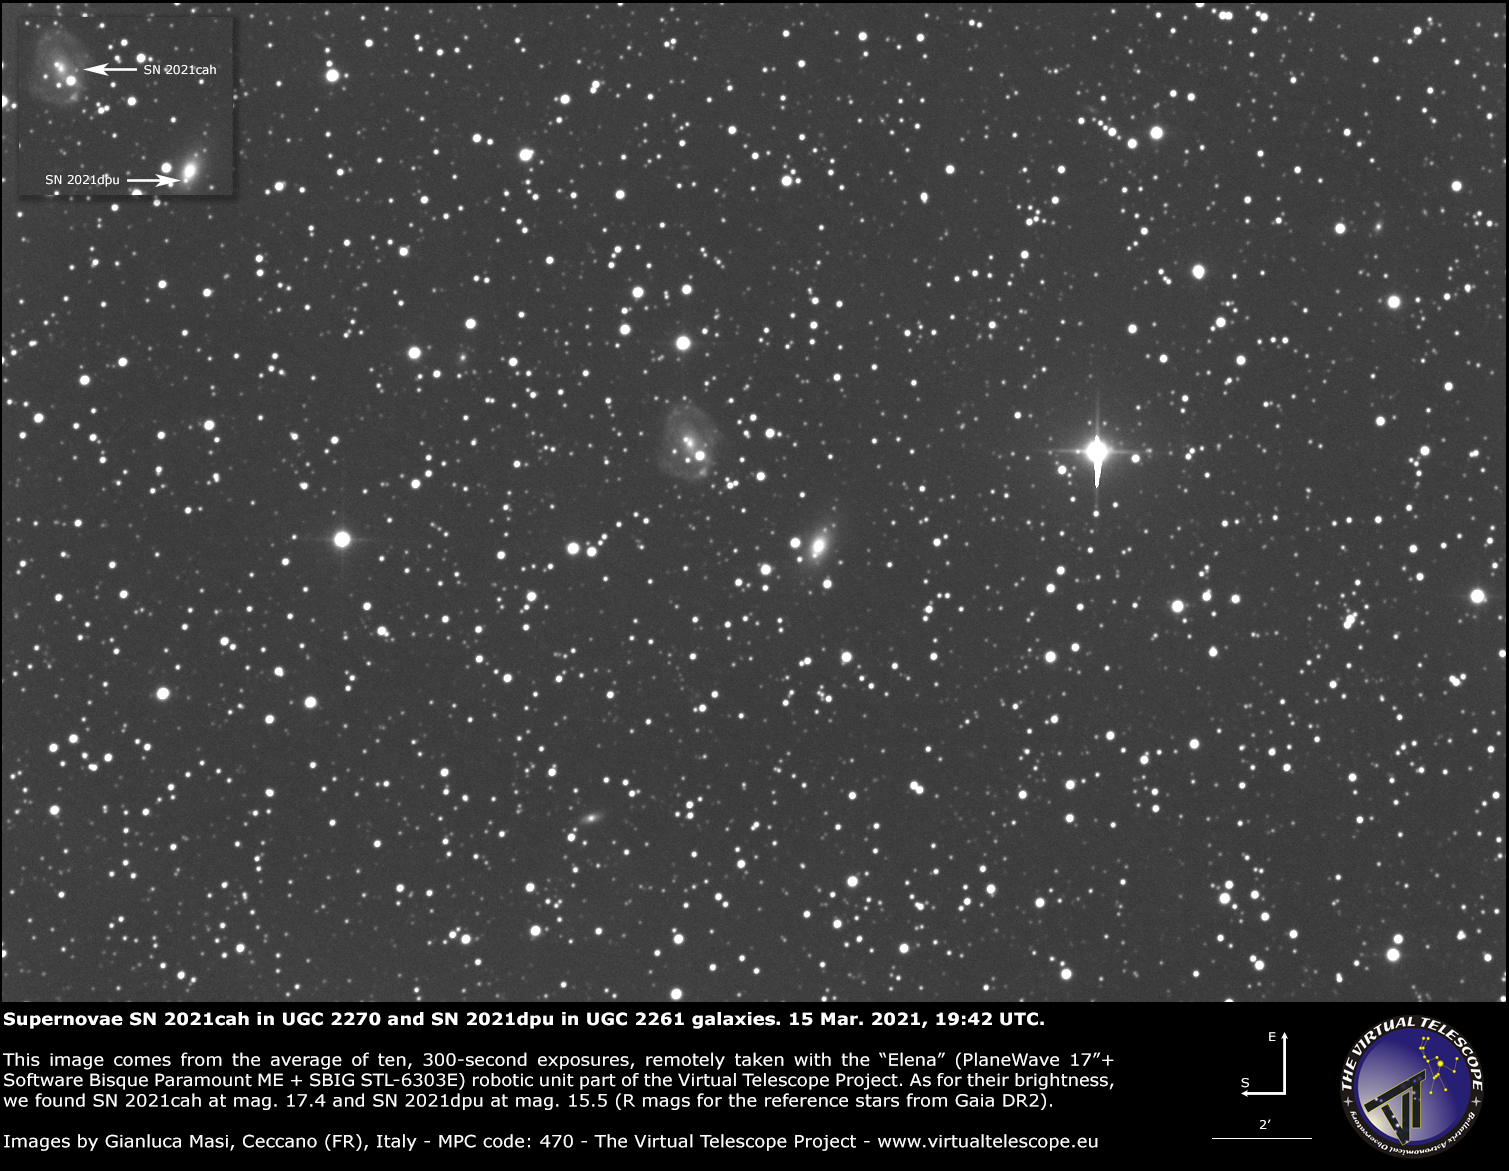 Supernovae SN 2021cah in UGC 2270 and SN 2021dpu in UGC 2261 galaxies: 15 Mar. 2021.